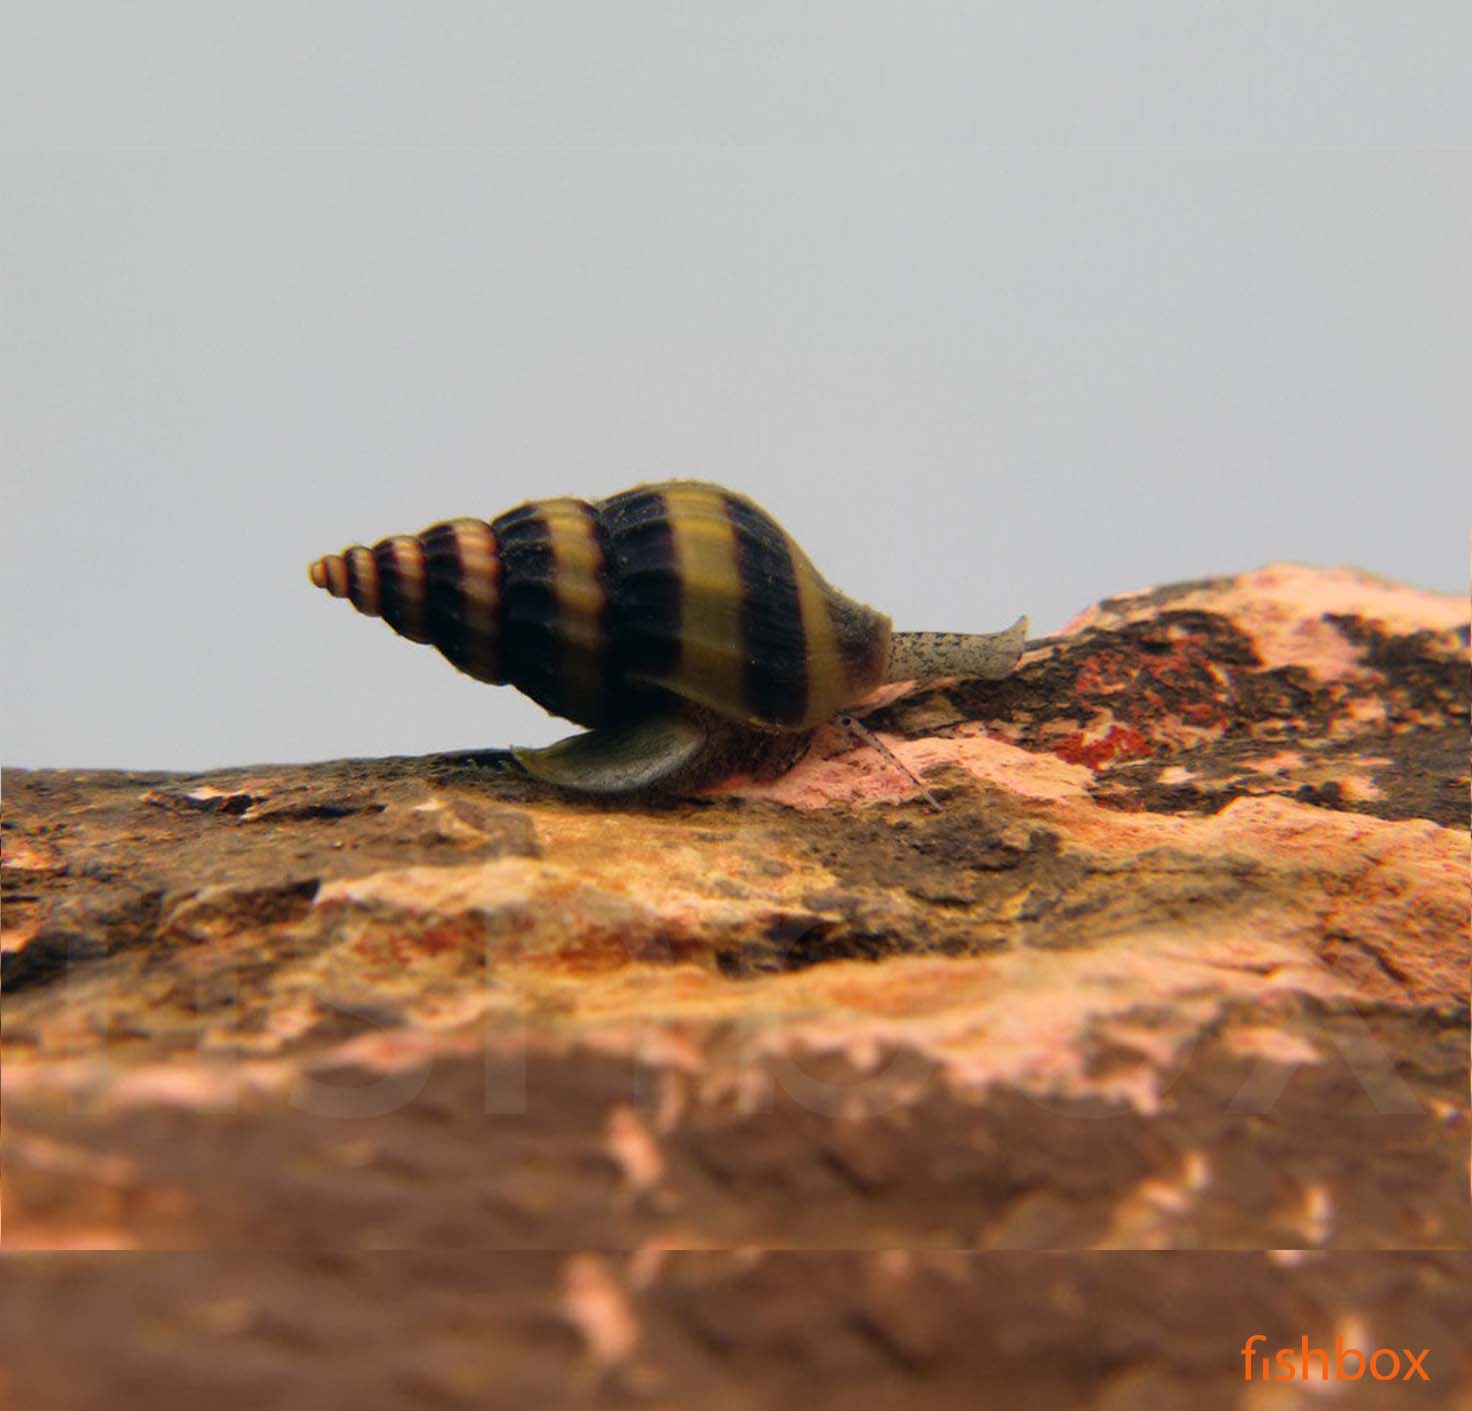 Anentome helena - polžojedi polž / Assasin snail - fishbox